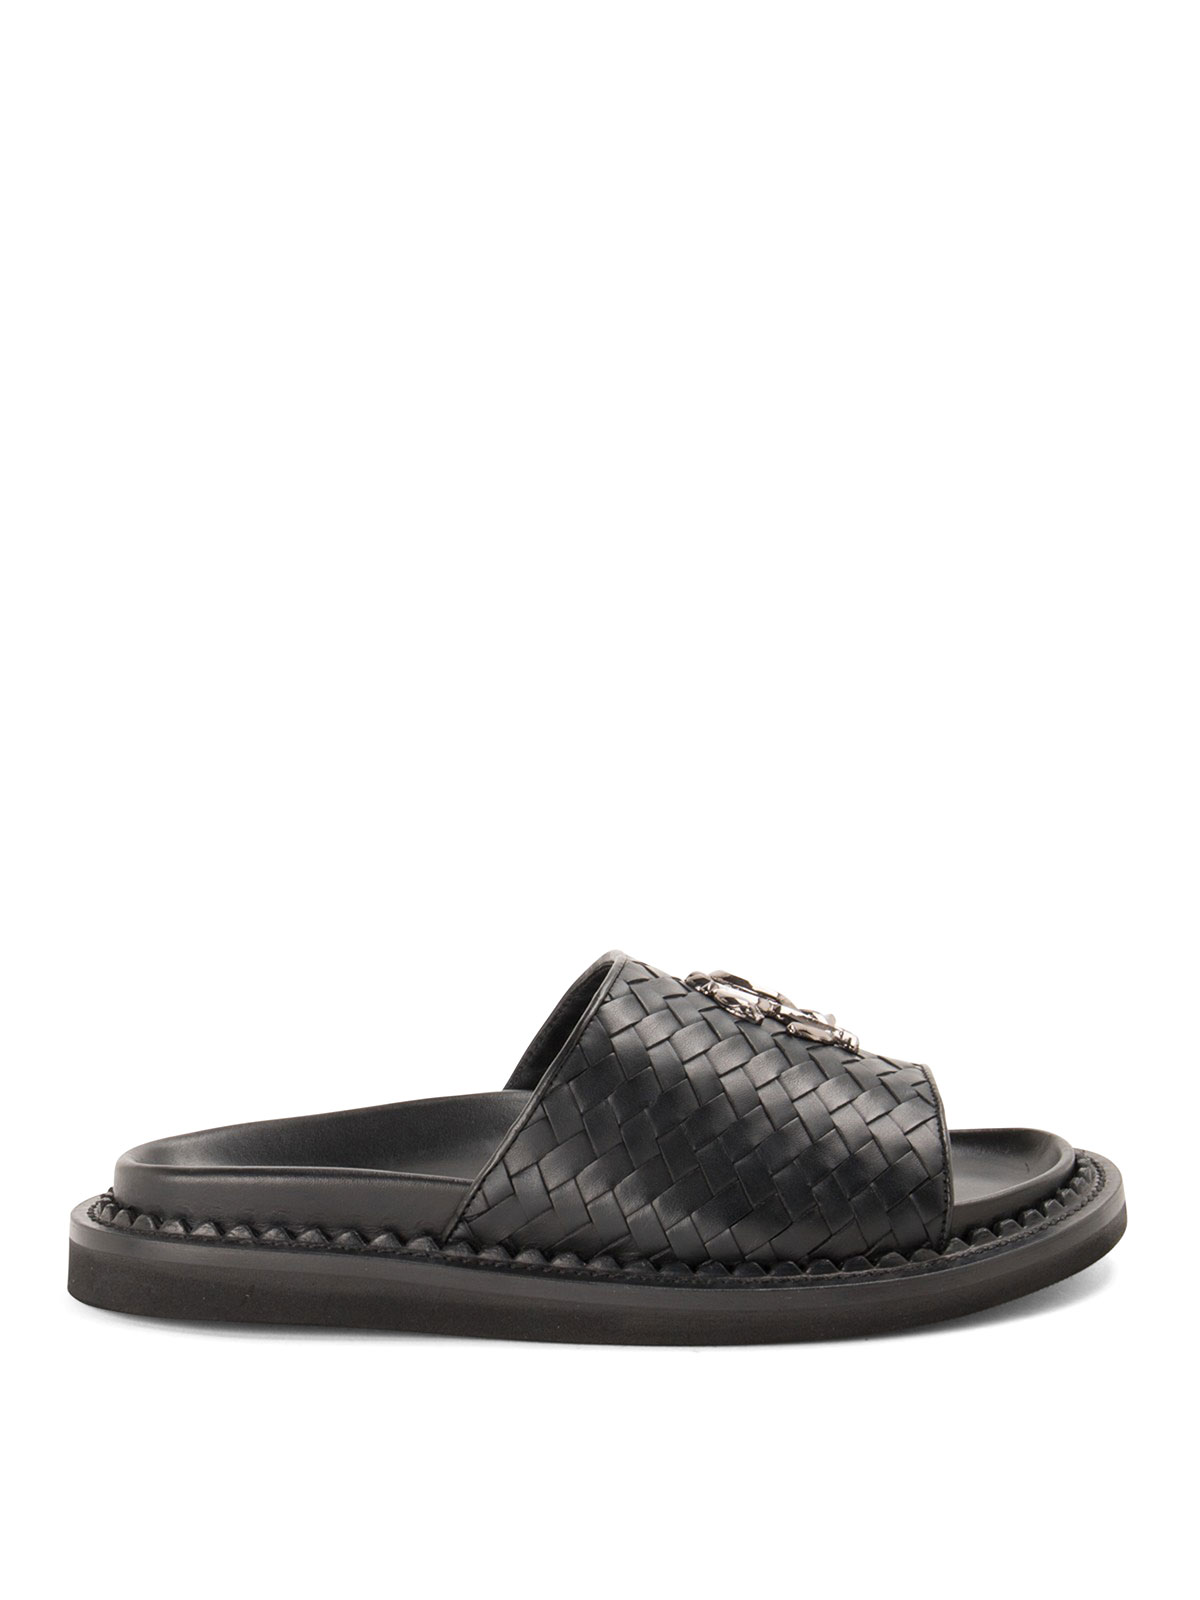 Sandals Roberto Cavalli - Woven leather sandals - 10783A | iKRIX.com